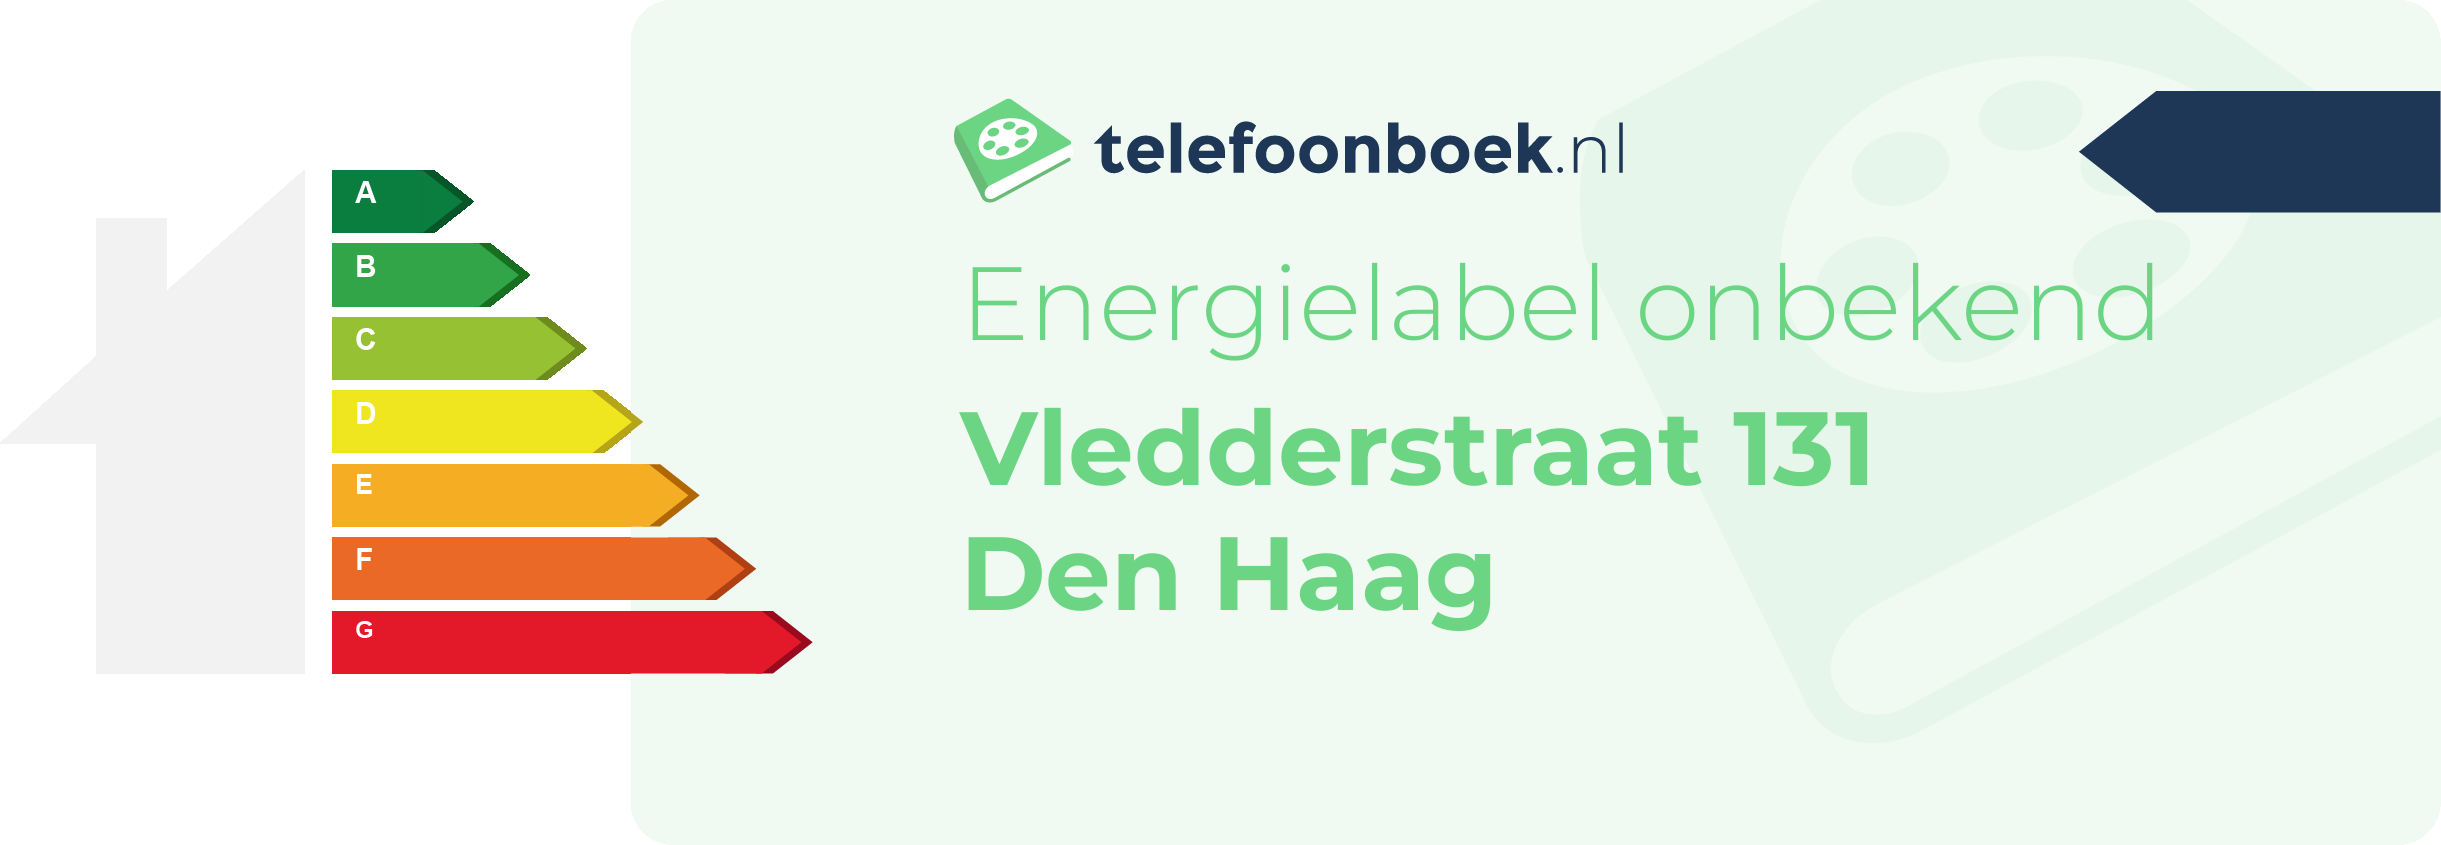 Energielabel Vledderstraat 131 Den Haag